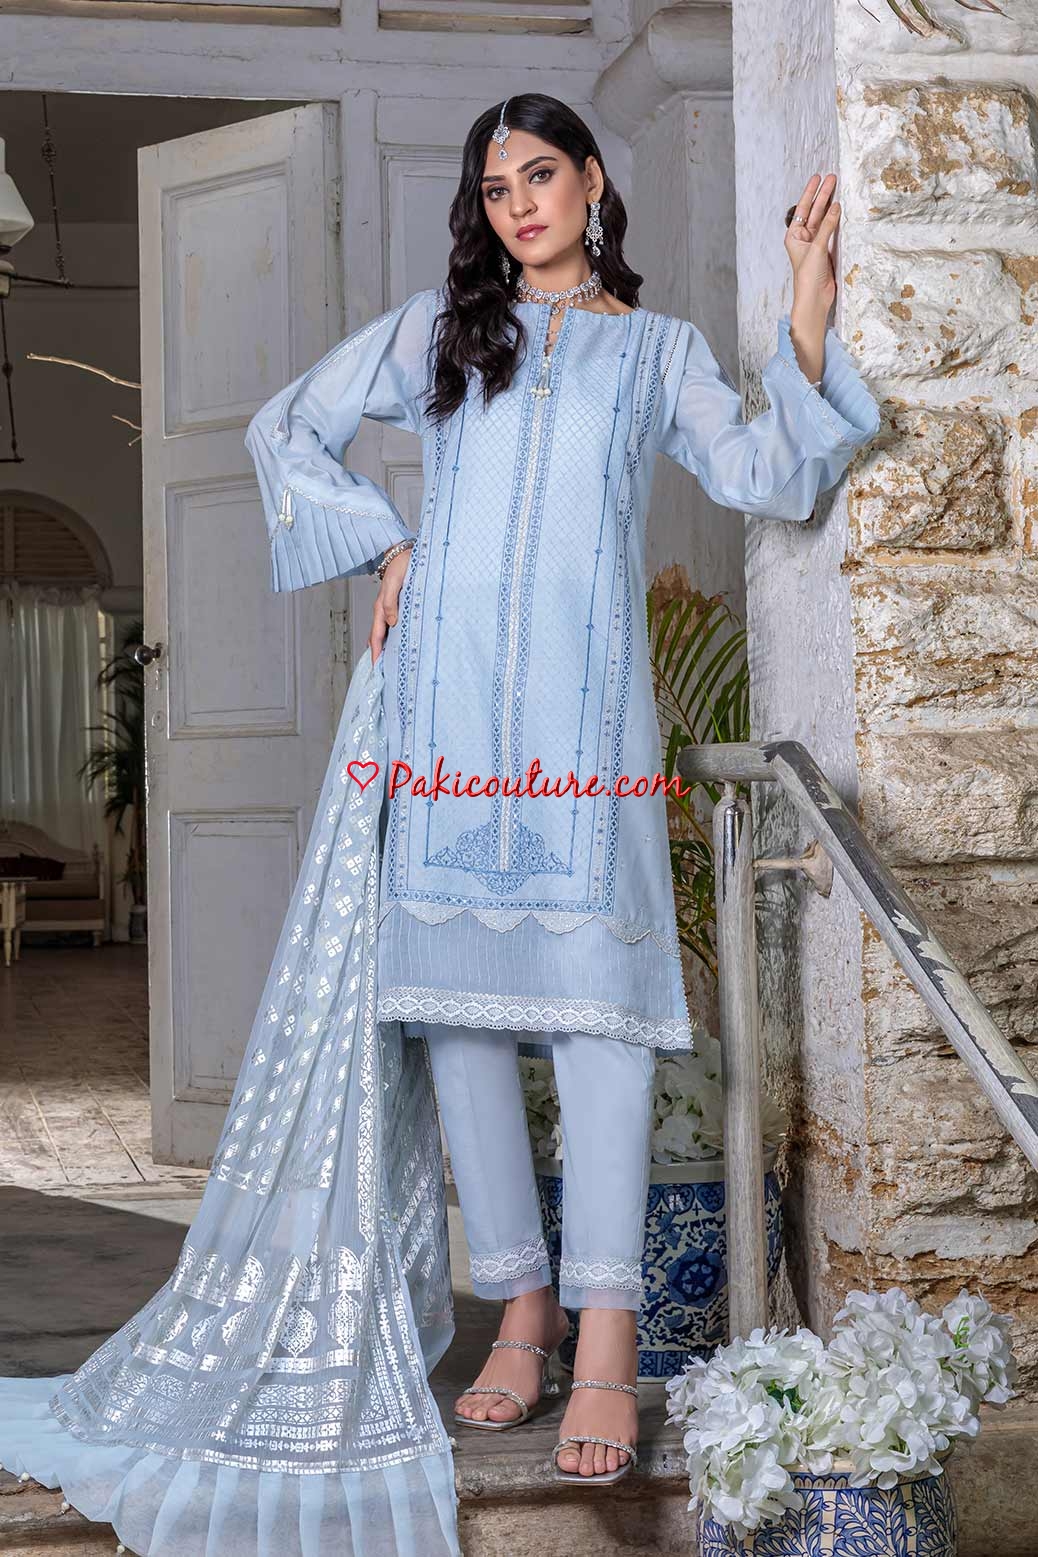 Bonanza Chamak Dhamak 2022 Shop Online | Buy Pakistani Fashion Dresses ...